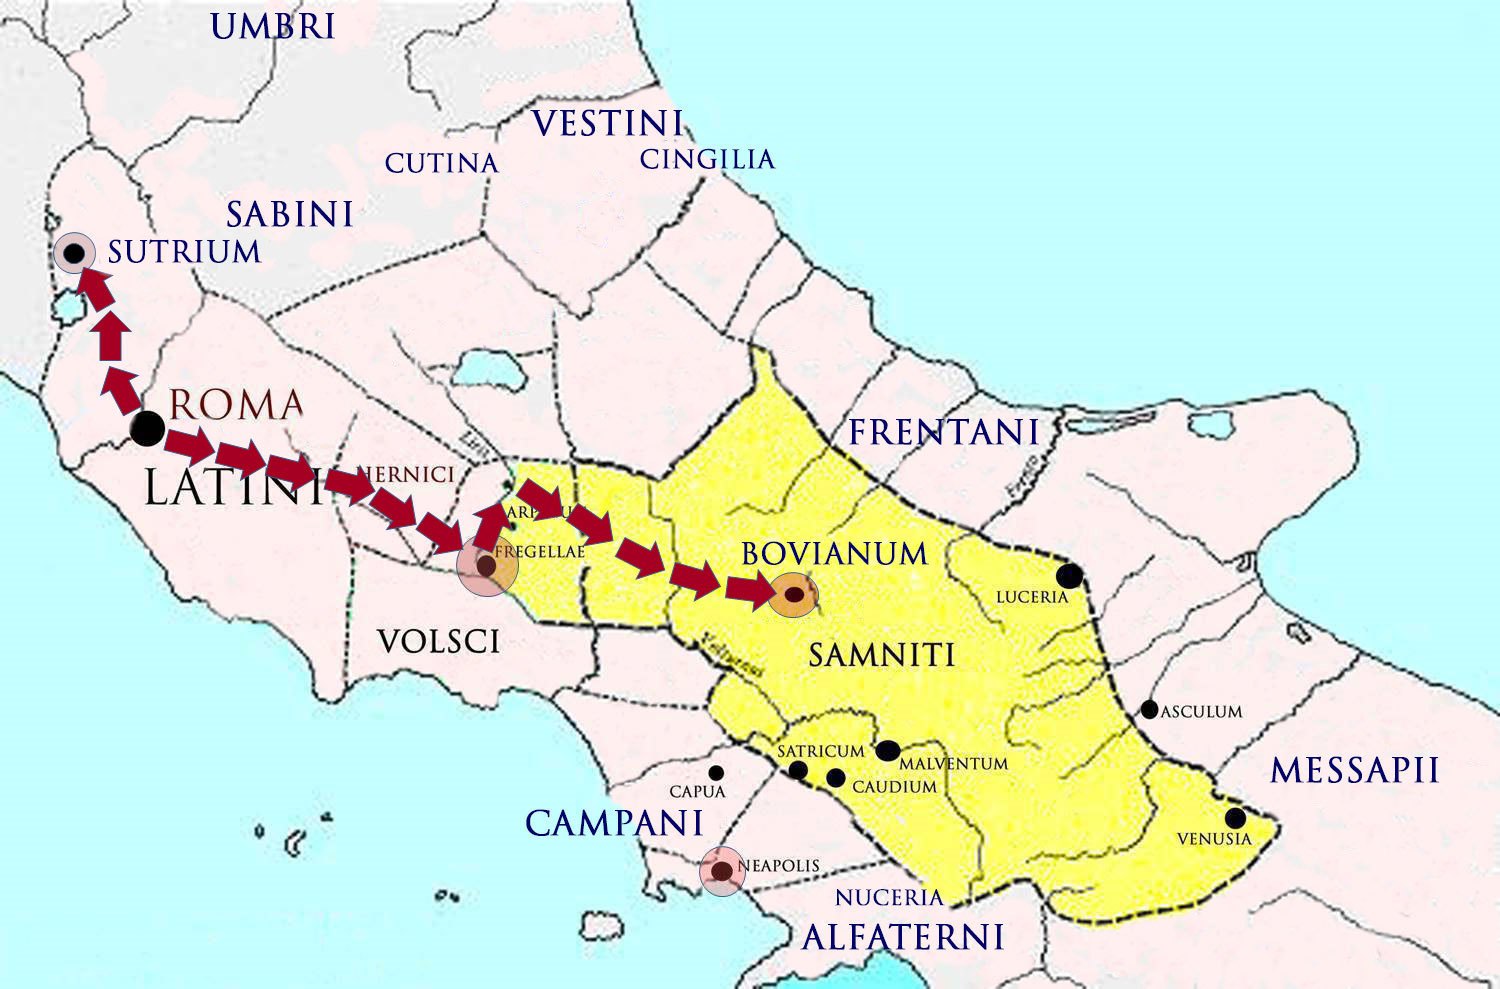 Rome sent two armies to Samnium and to Etruria